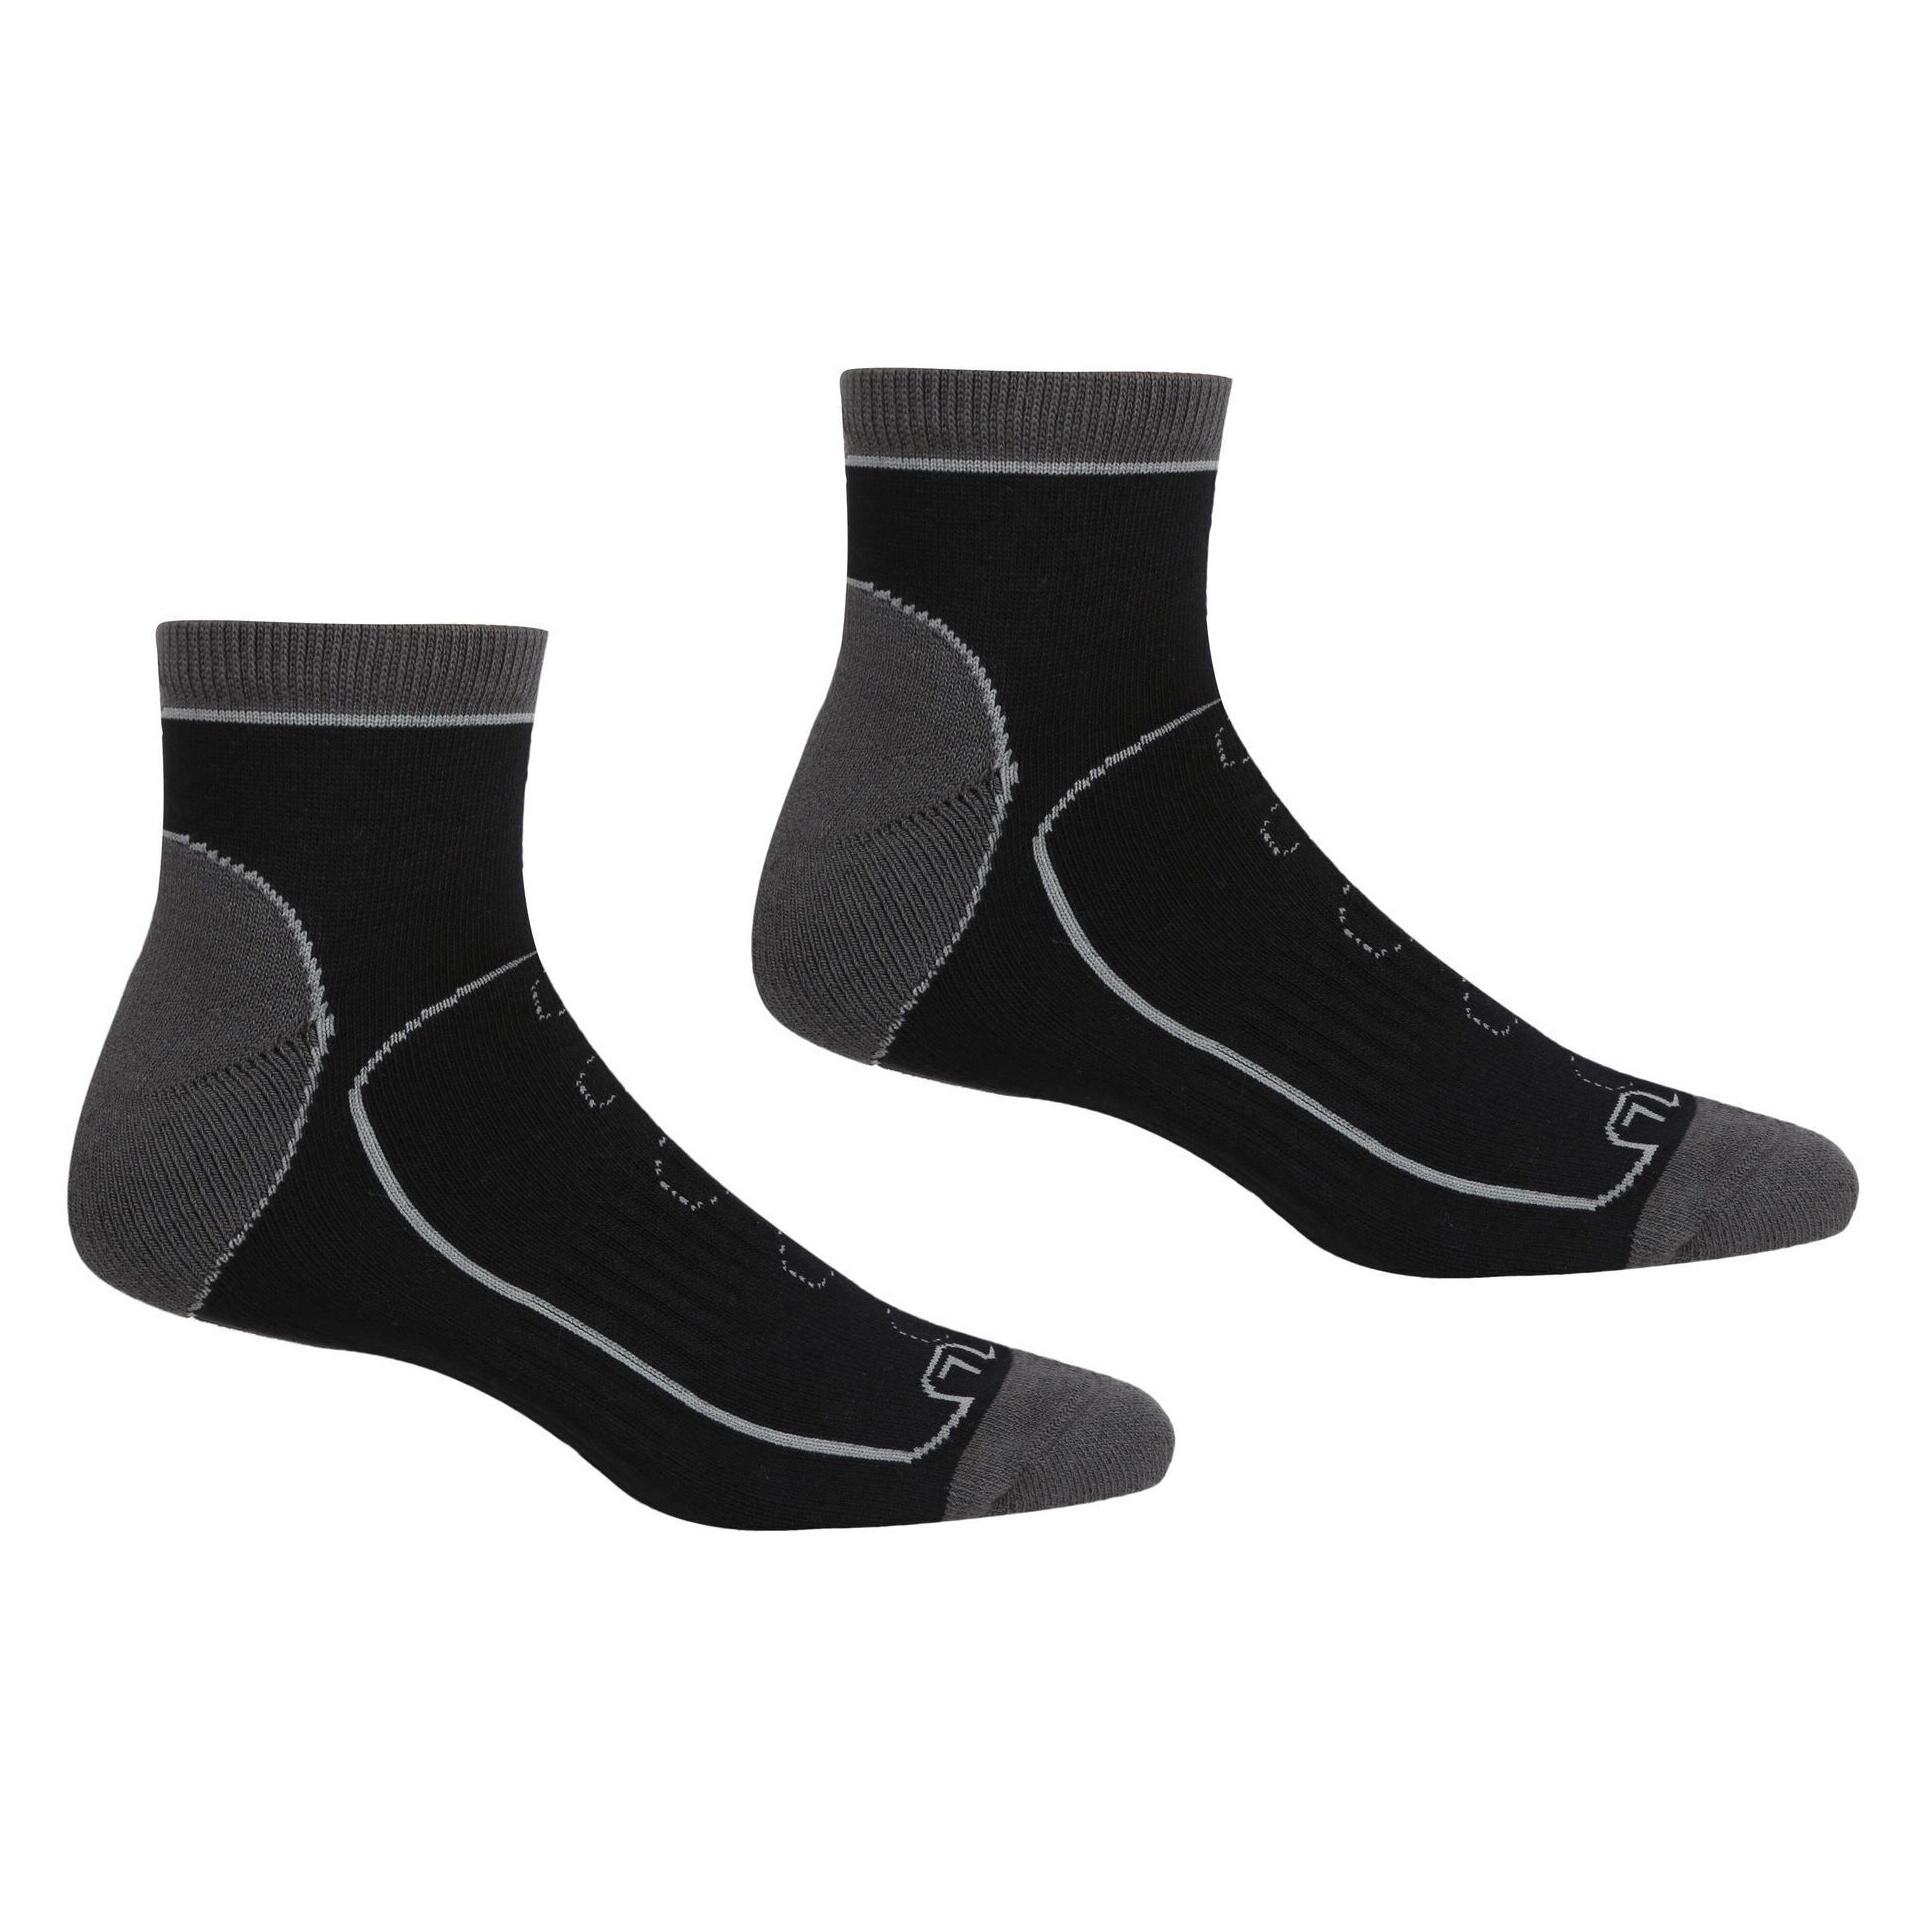 REGATTA Mens Samaris Trail Ankle Socks (Pack of 2) (Black/Dark Steel)